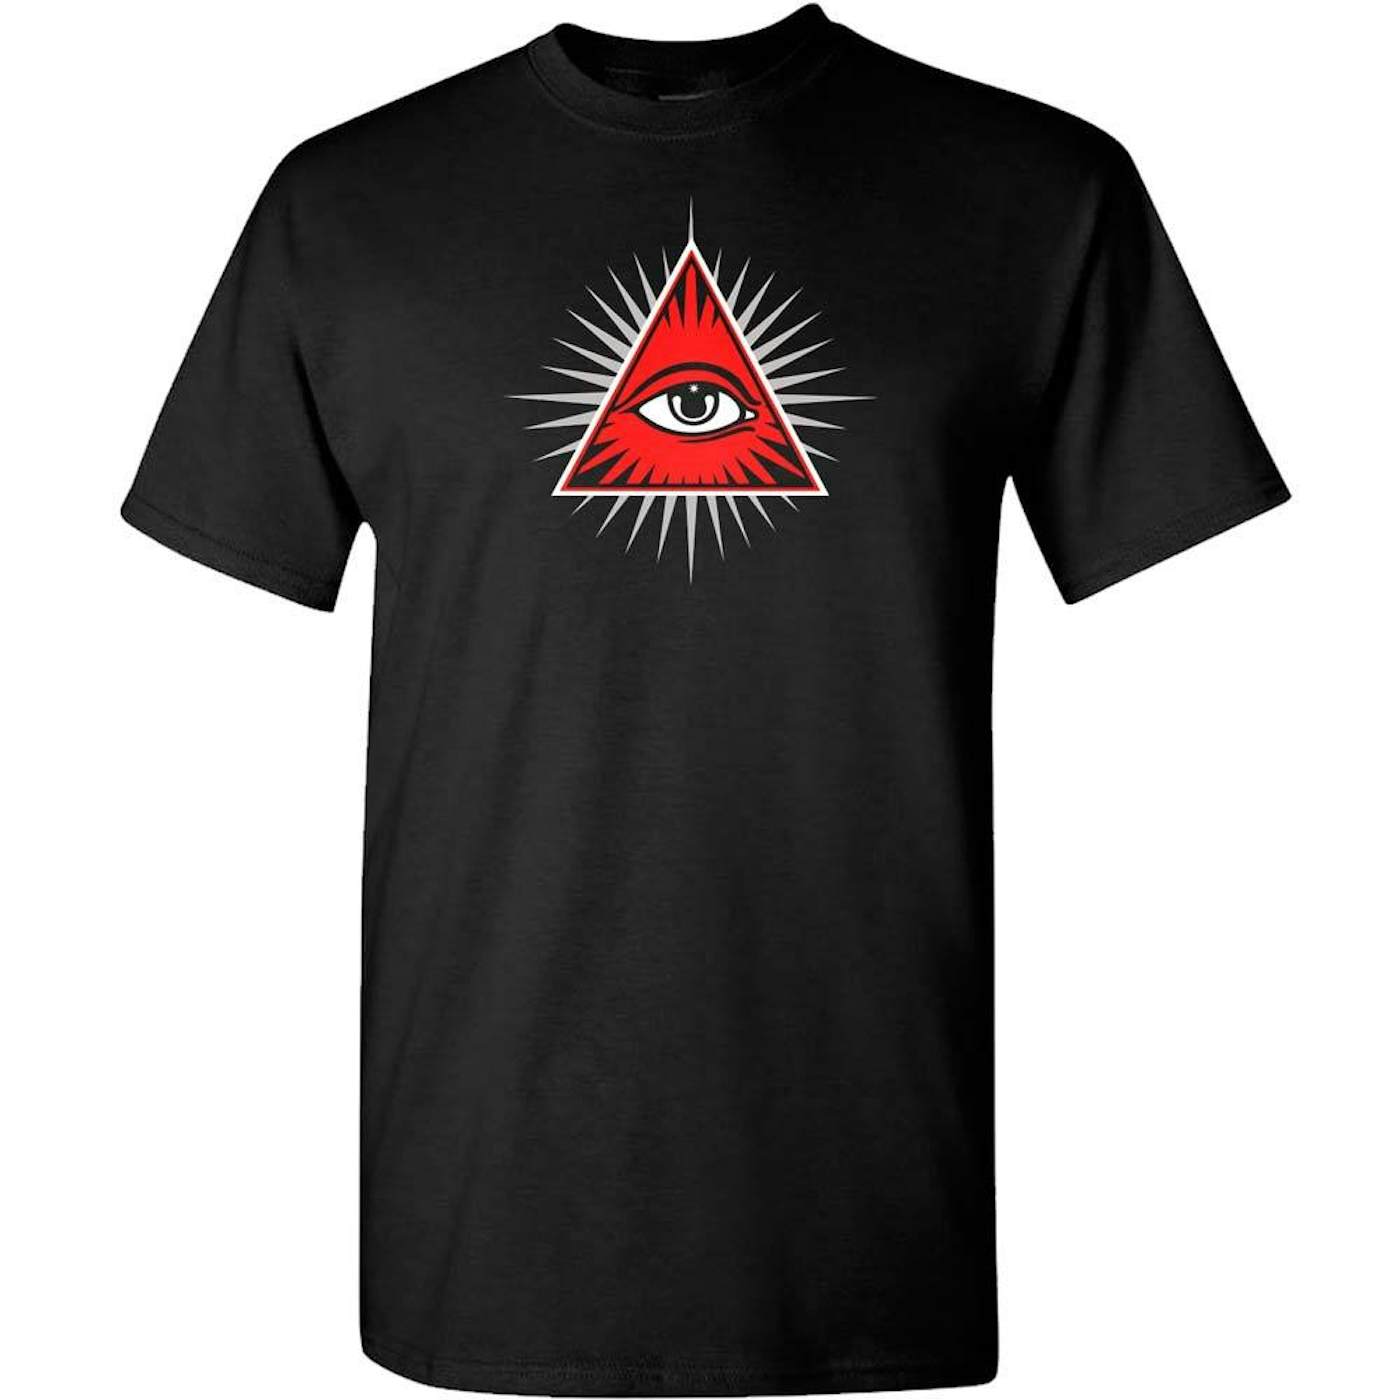 Roky Erickson Pyramid Black T-Shirt